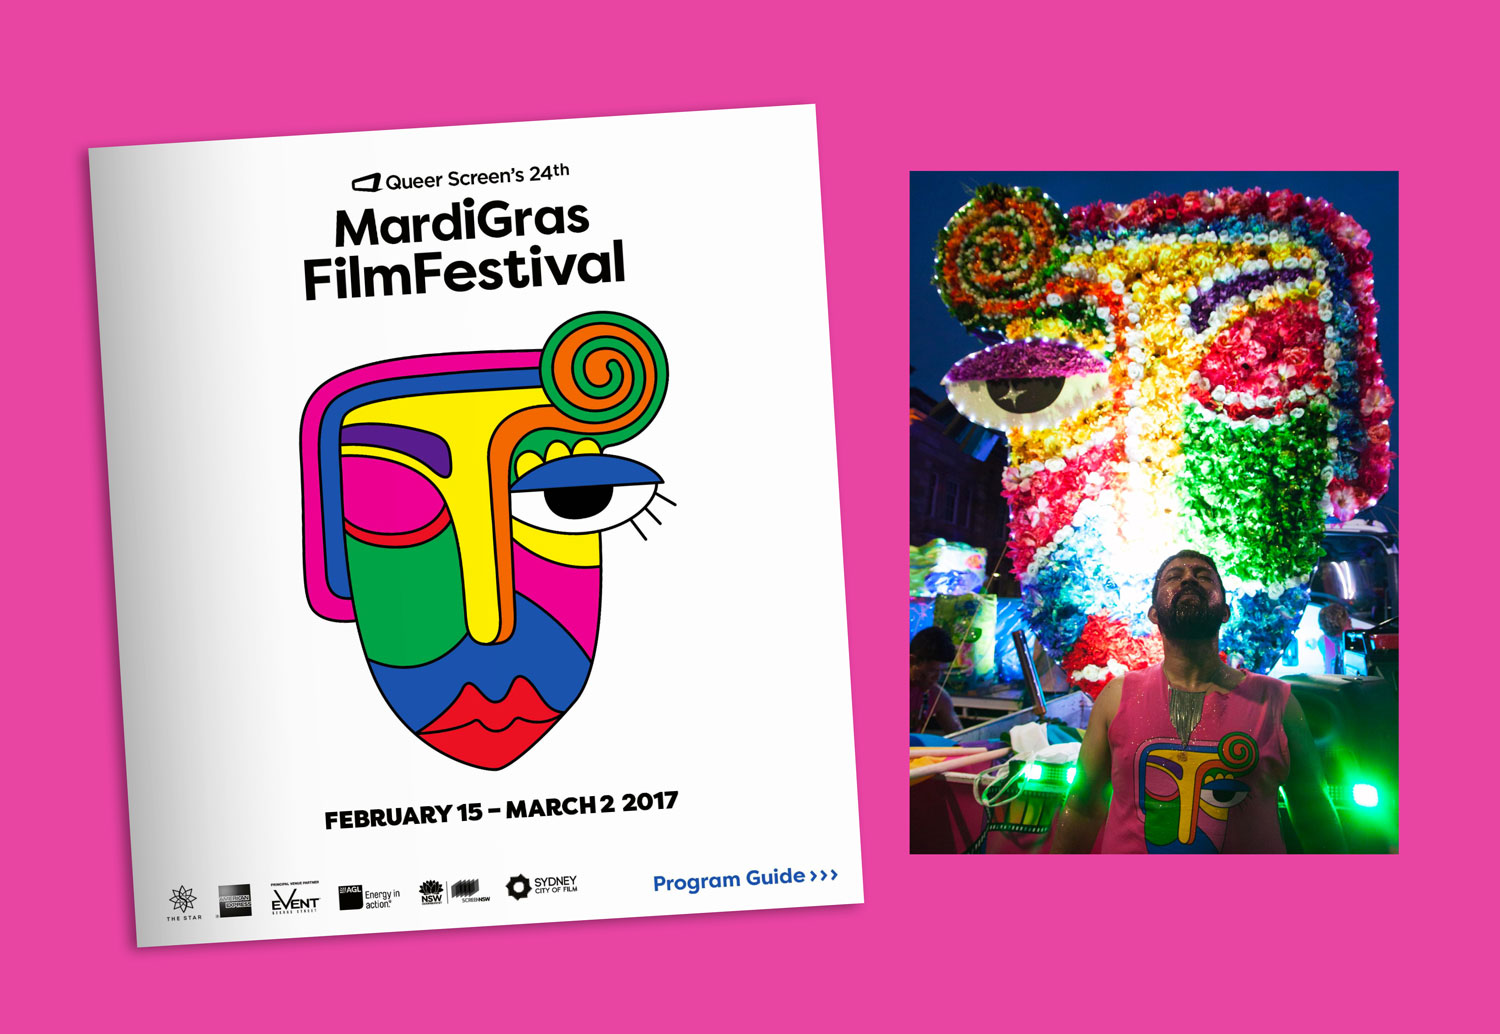 Program guide next to Mardi Gras float inspired by artwork